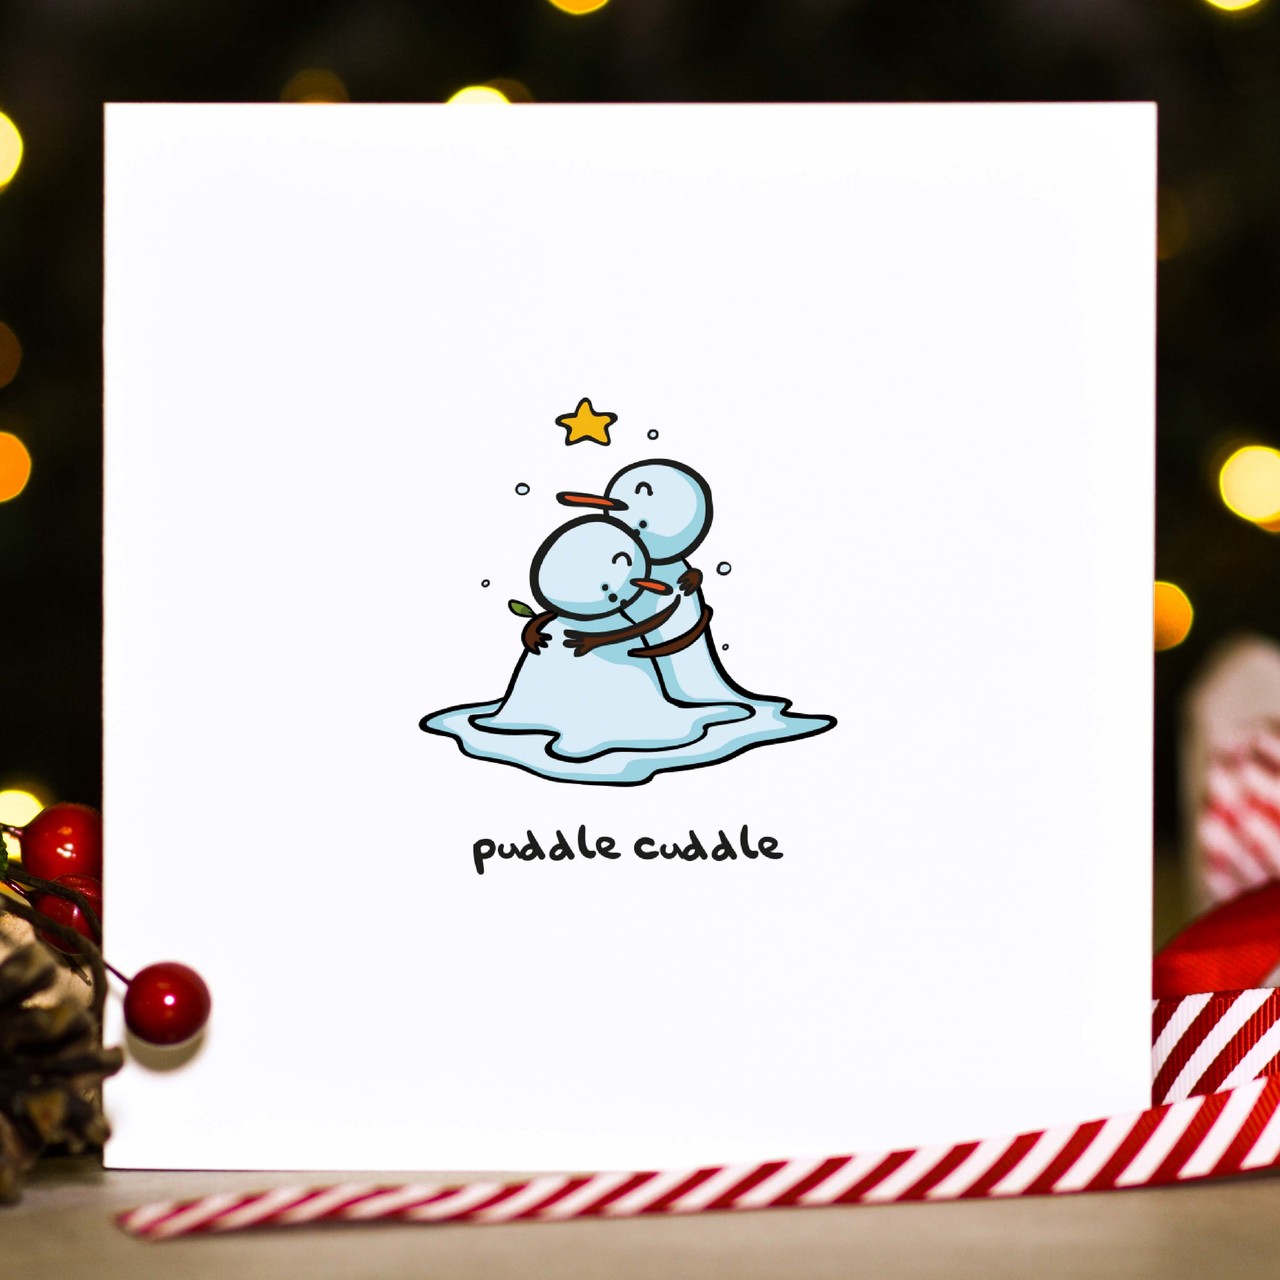 Puddle cuddle Christmas Card